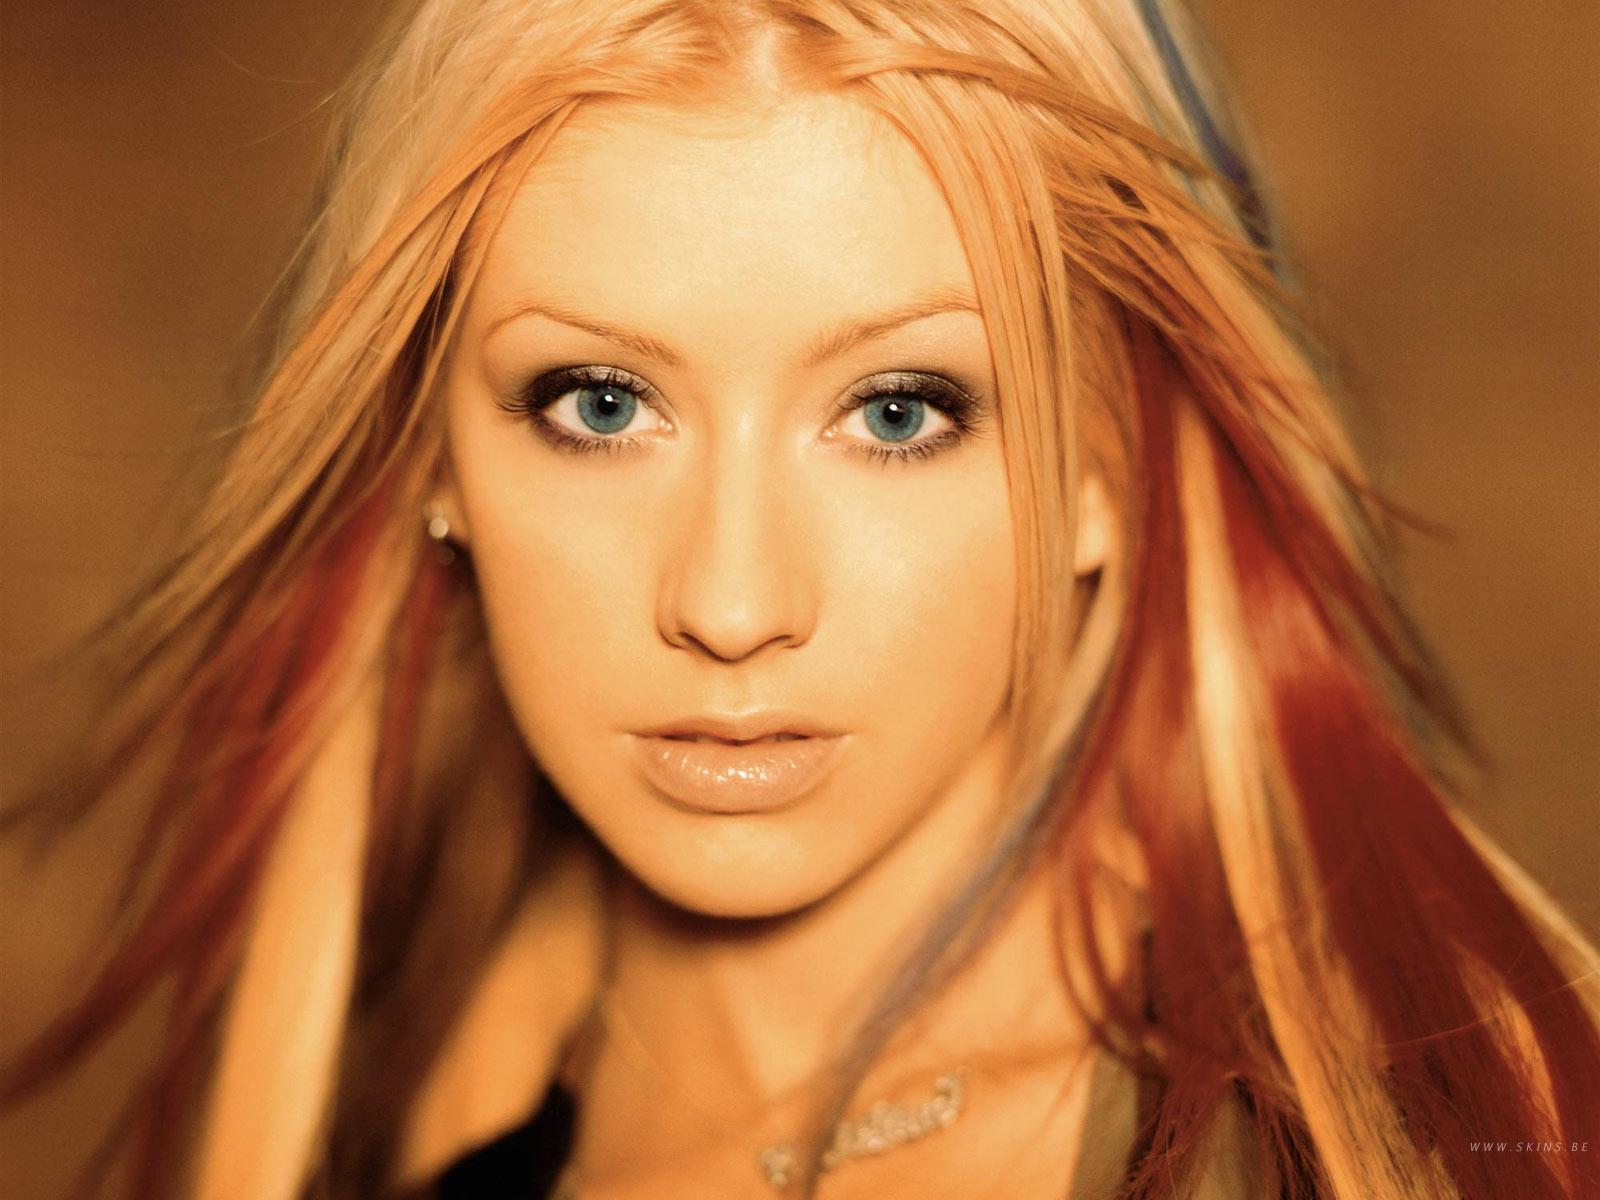 Christina Aguilera wallpaper №10775.